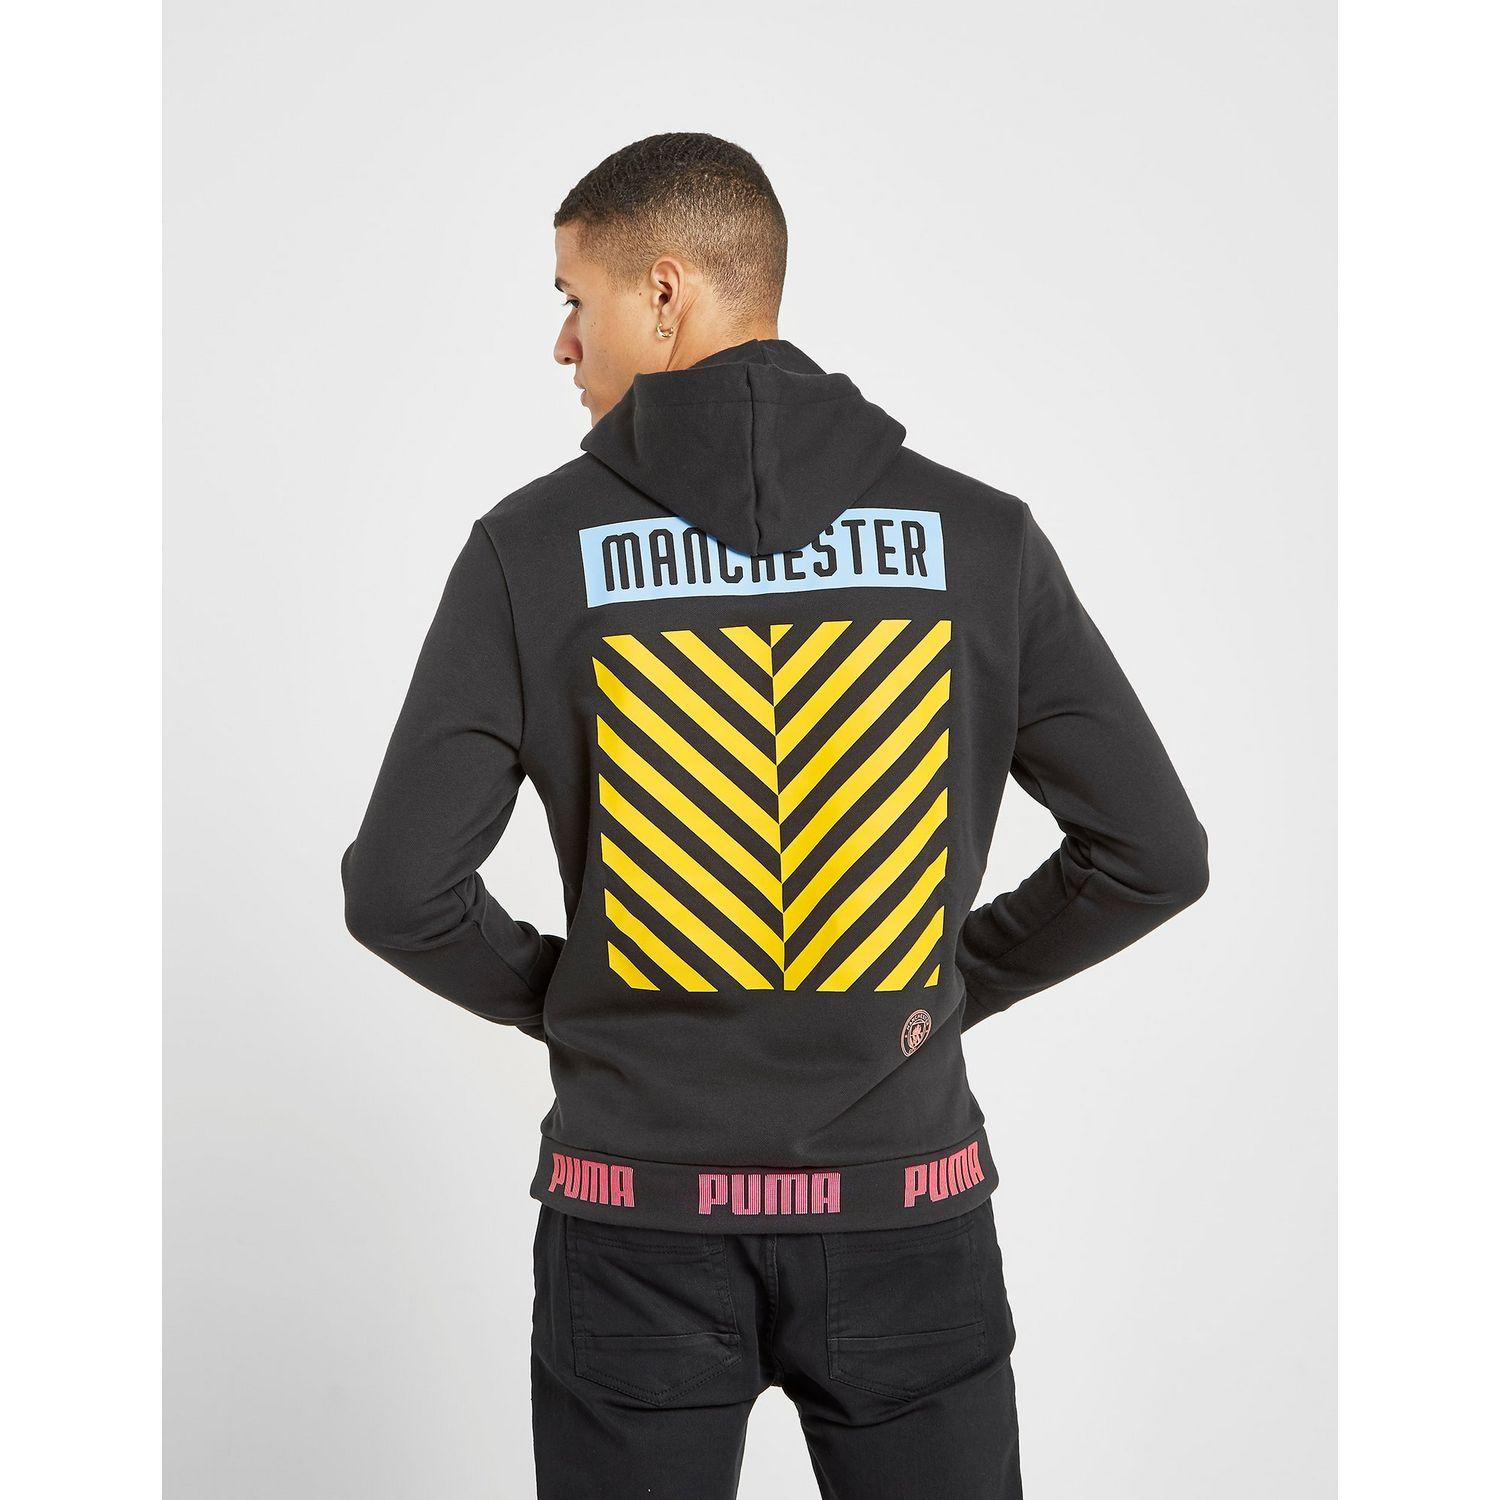 man city puma jumper